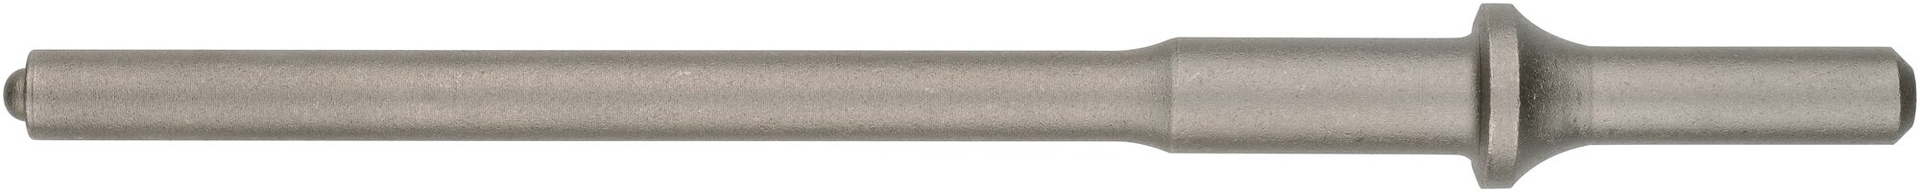 HAZET Vibrations-Splinttreiber 10 mm für Vibrations-Meißel 9035V-010